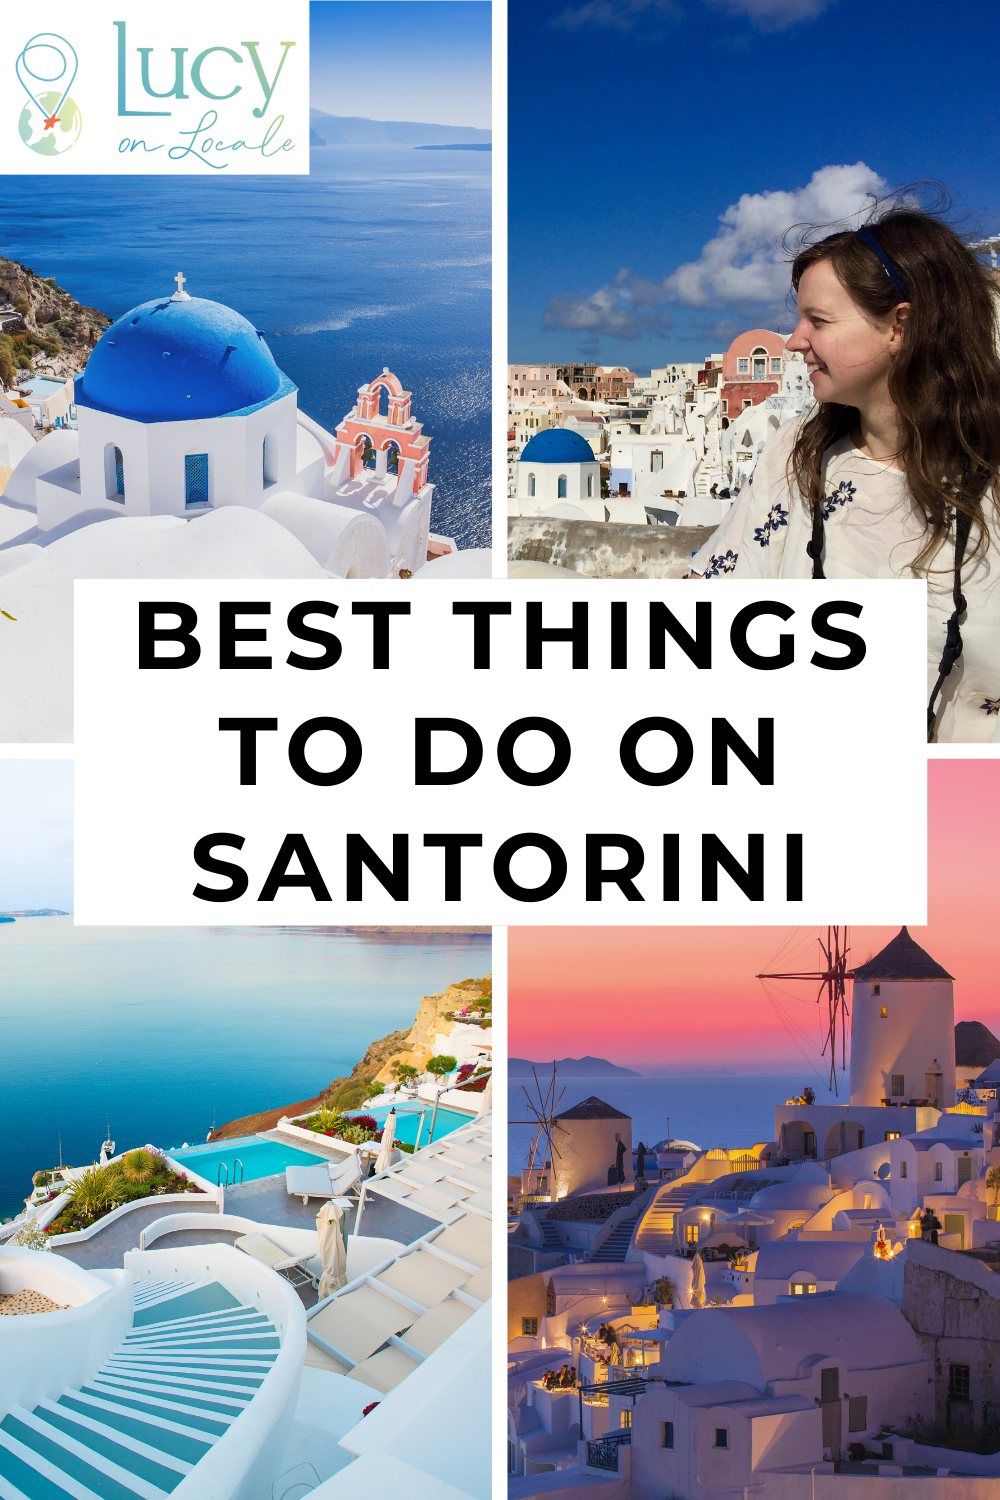 Top Things to Do On Santorini